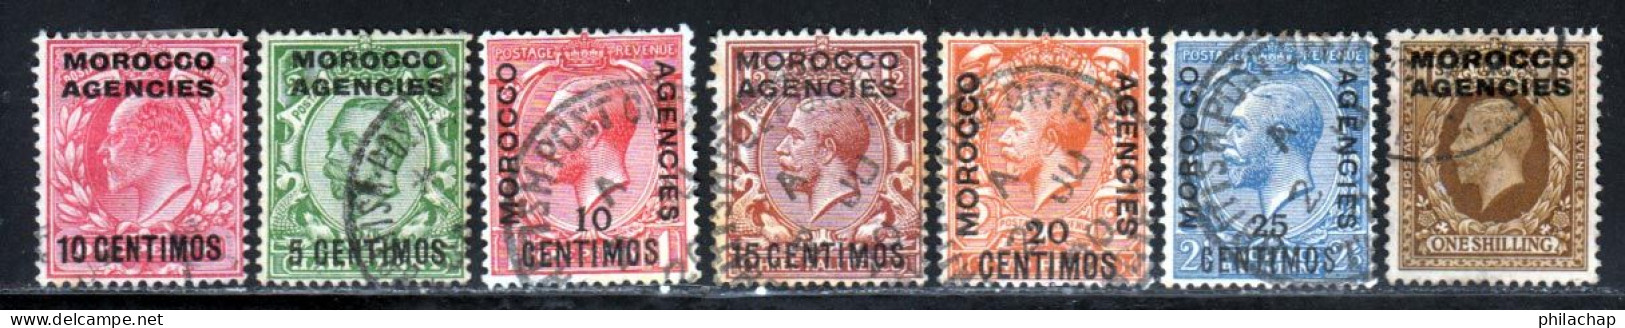 Maroc Anglais Zone Espagnol 1907 Yvert 24 - 38 / 42 - 53 (o) B Oblitere(s) - Morocco Agencies / Tangier (...-1958)